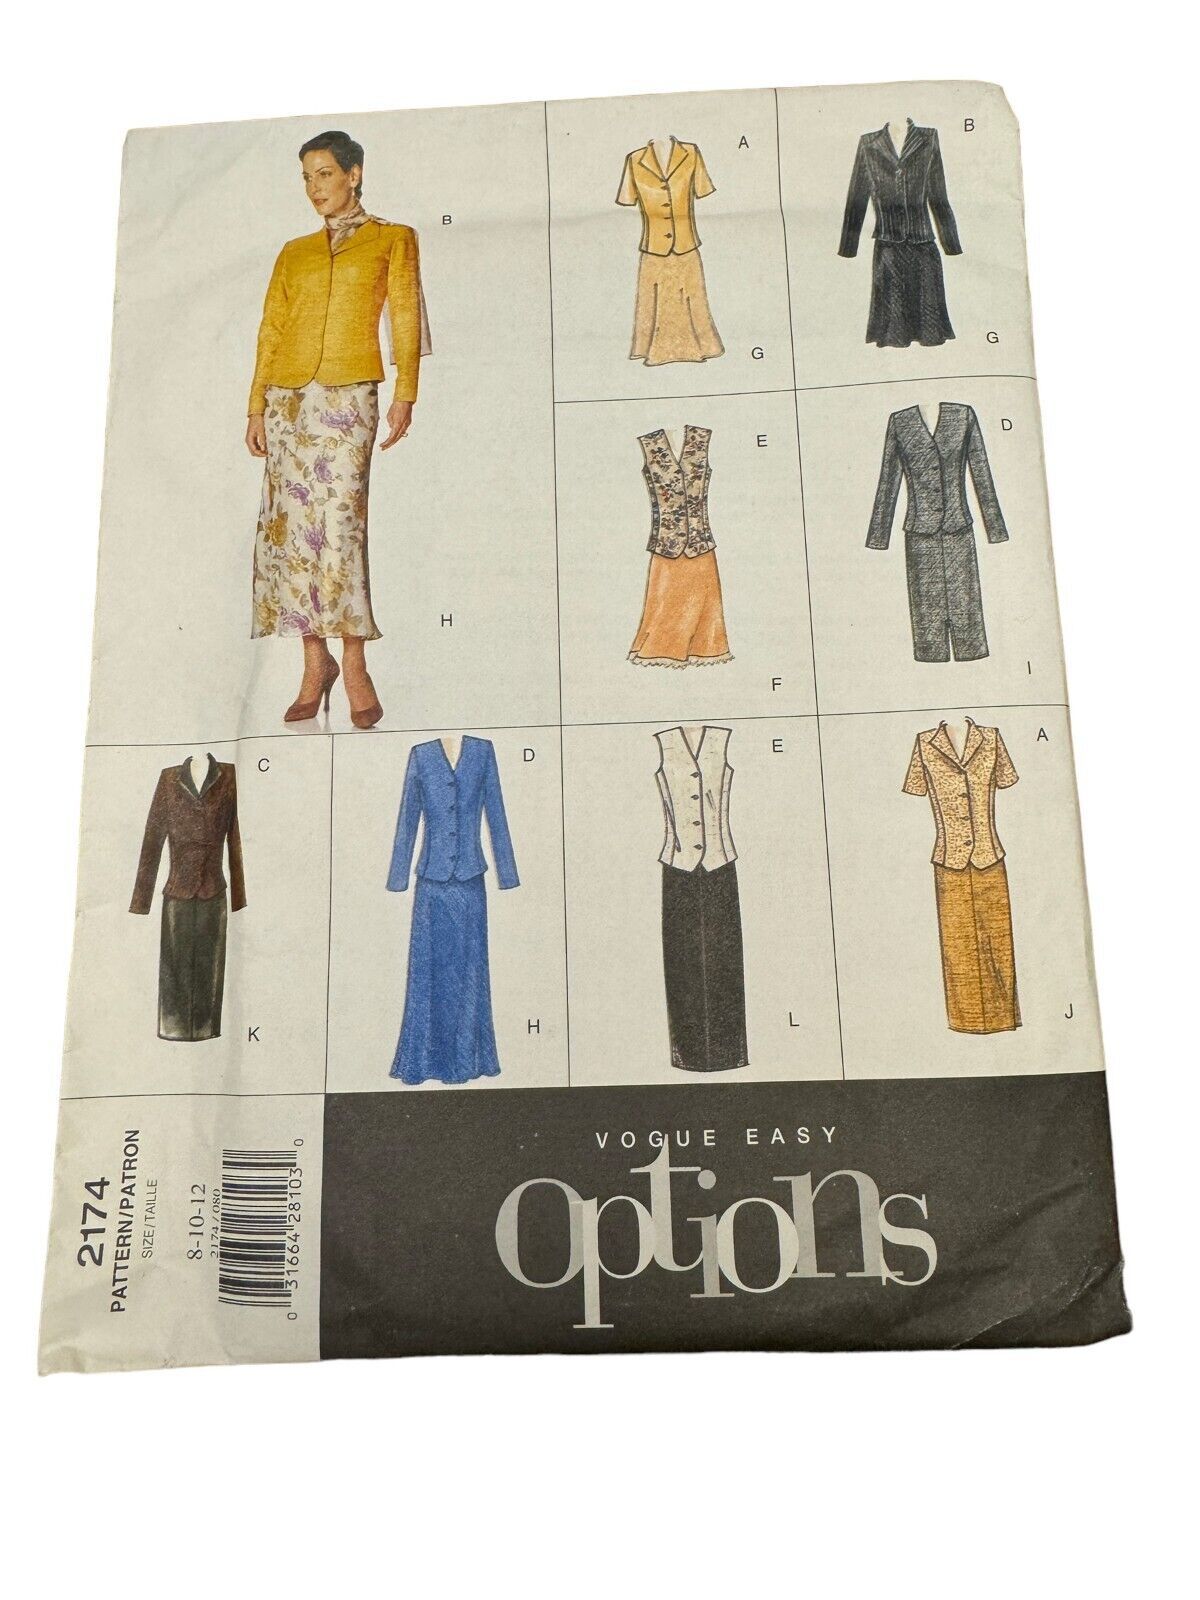 Vogue Sewing Pattern 2174 Misses Top Skirt Scarf Princess Seams Wardrobe 8-12 UC - $7.99